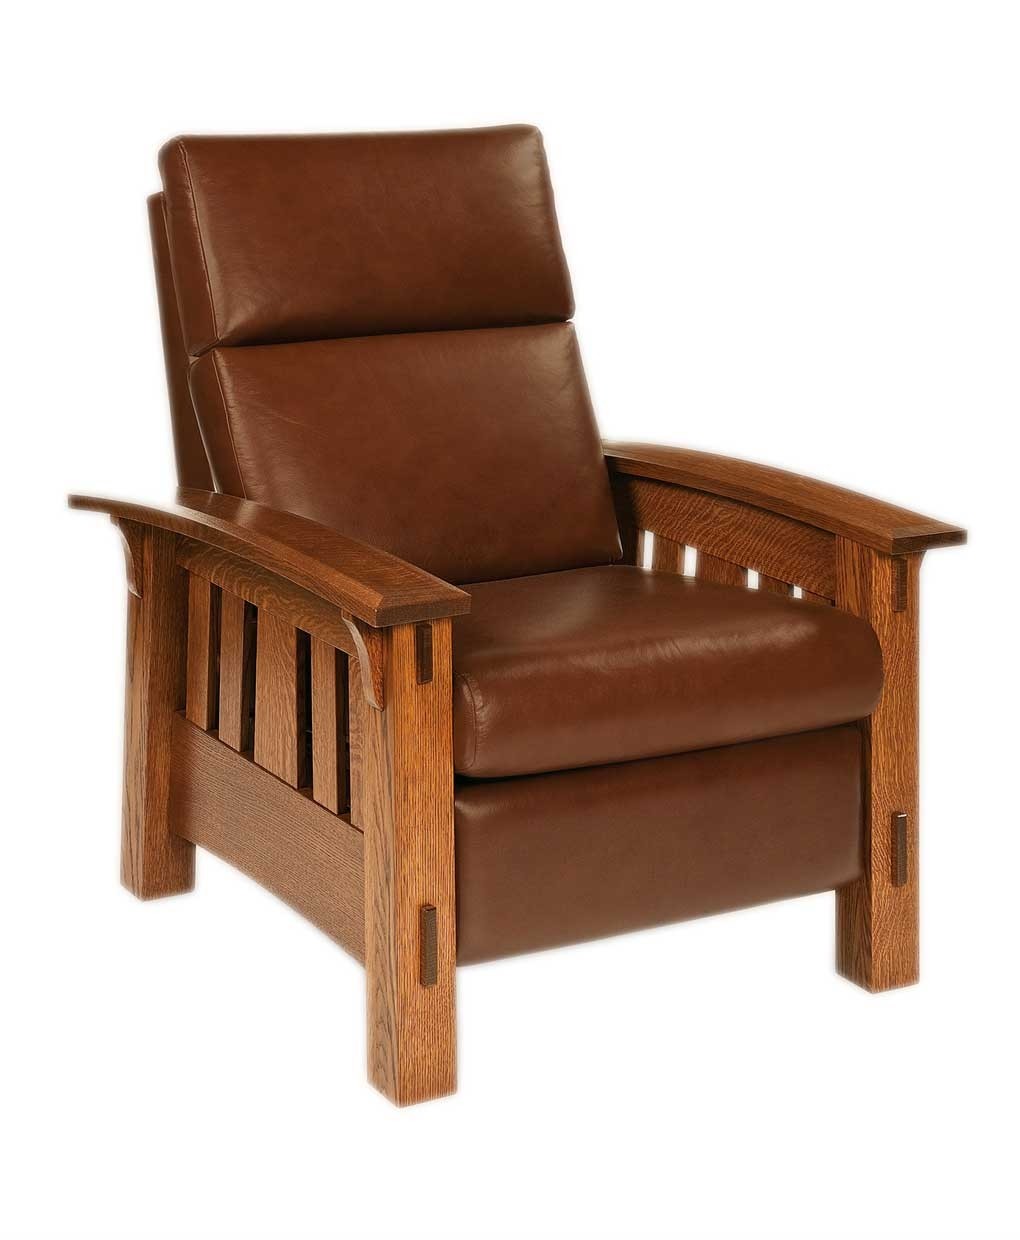 Craftsman style recliner